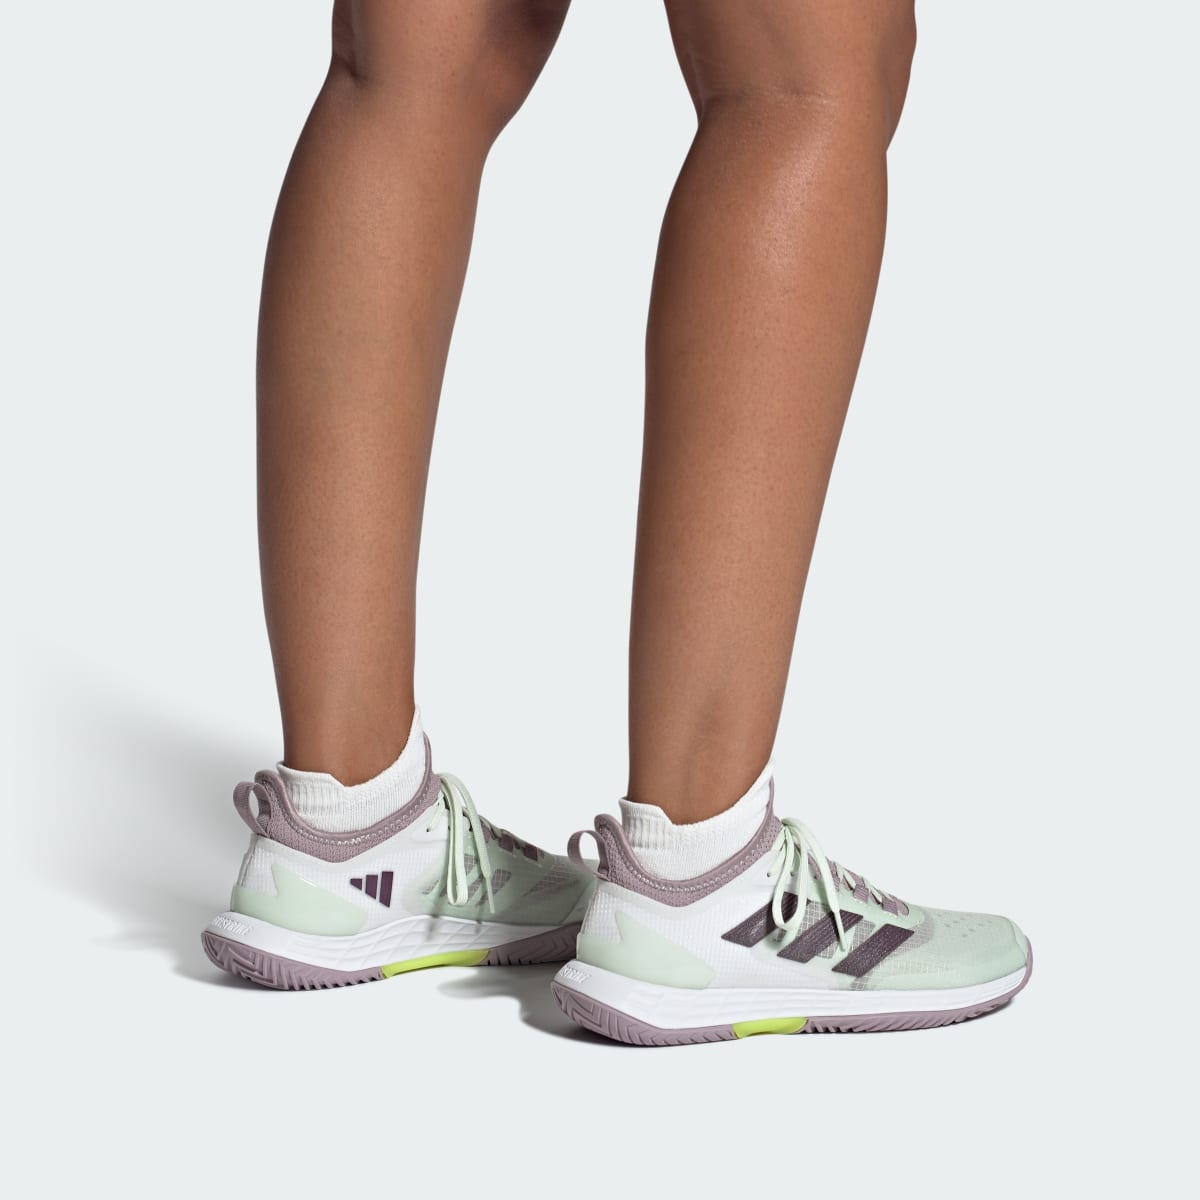 Adidas Scarpe da tennis adizero Ubersonic 4.1. 5